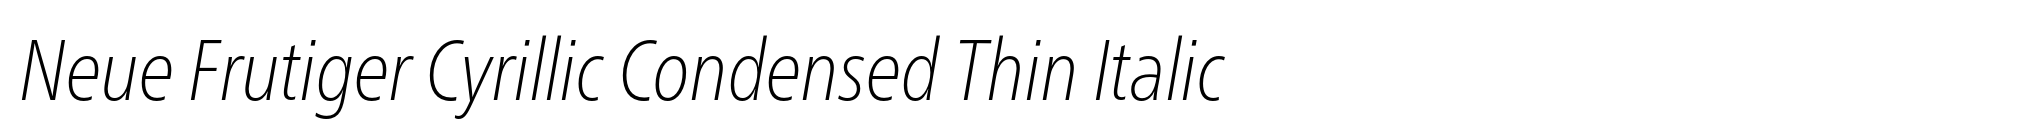 Neue Frutiger Cyrillic Condensed Thin Italic image